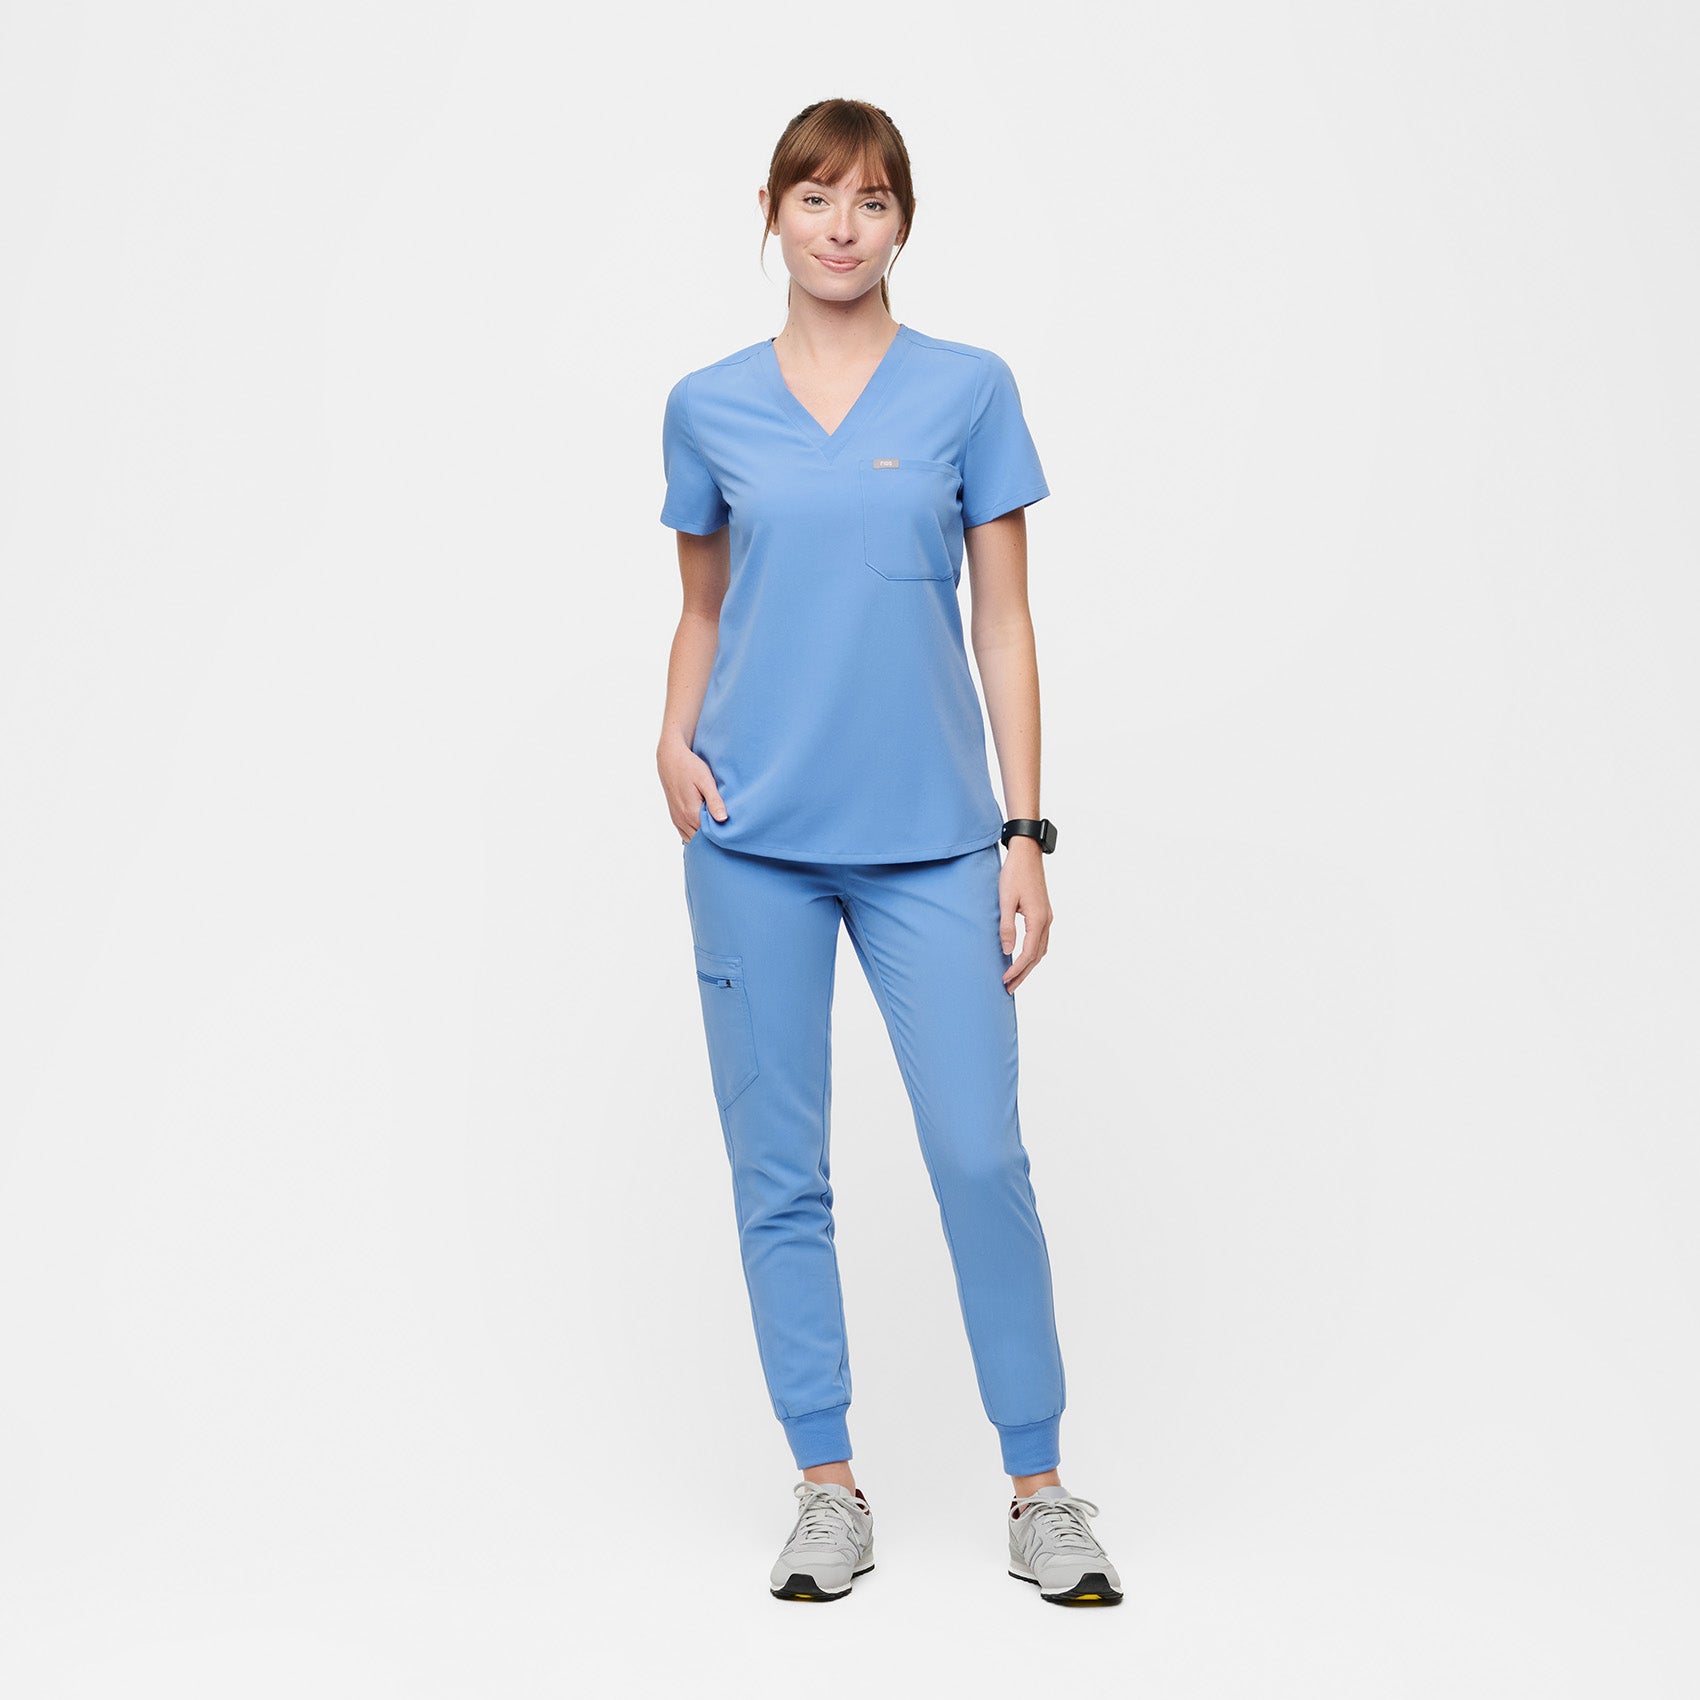 Female Modern Nurse Uniform Design - Design Talk